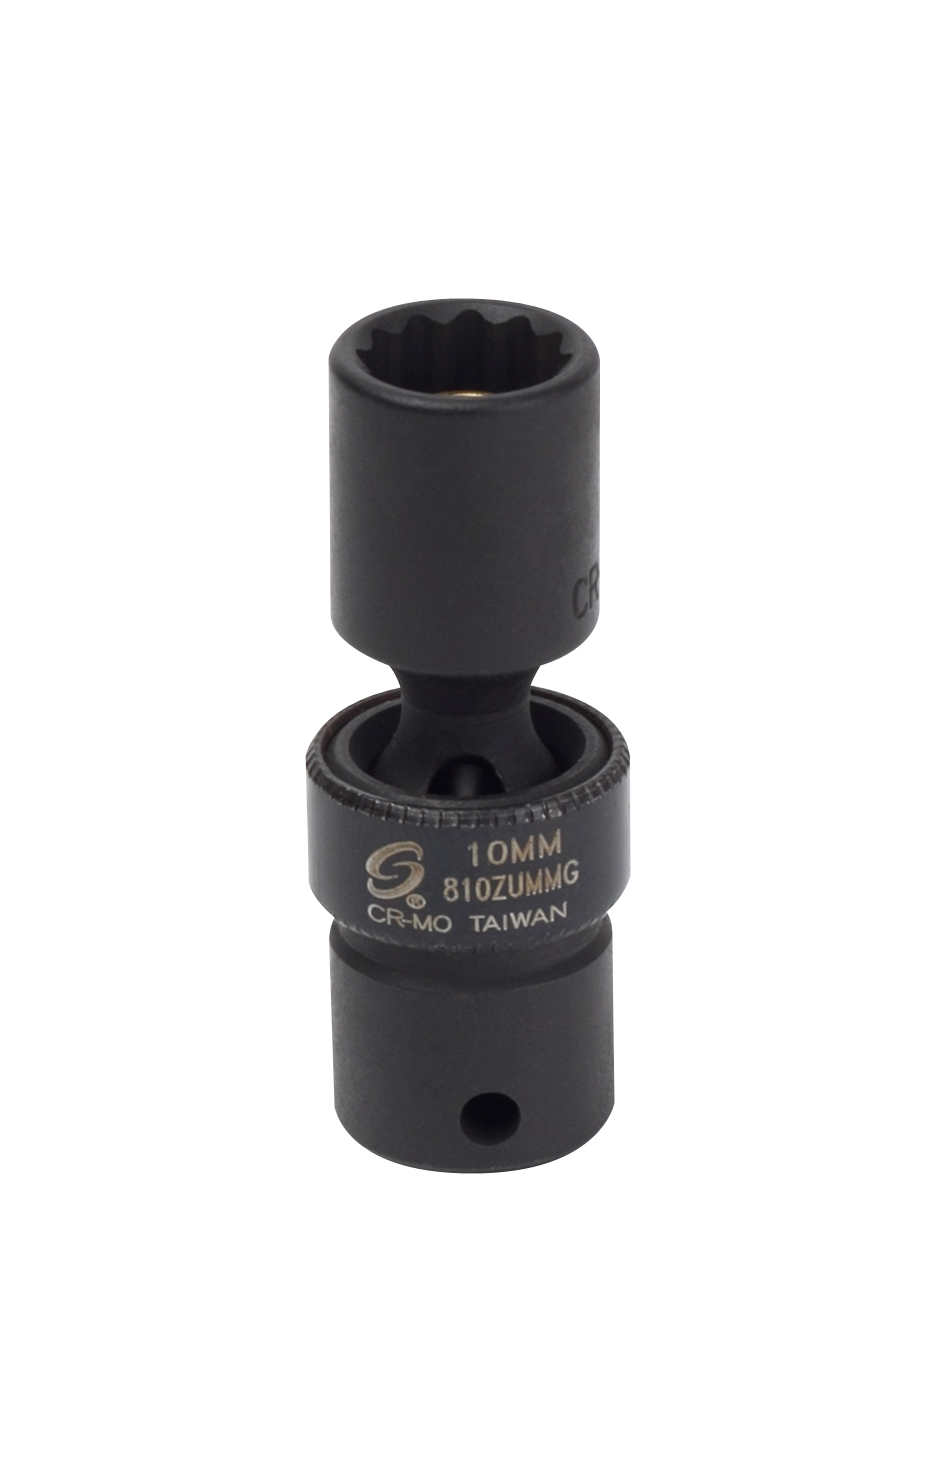 10mm Magnetic Impact Socket Sunex 810MMG 1/4" Dr 